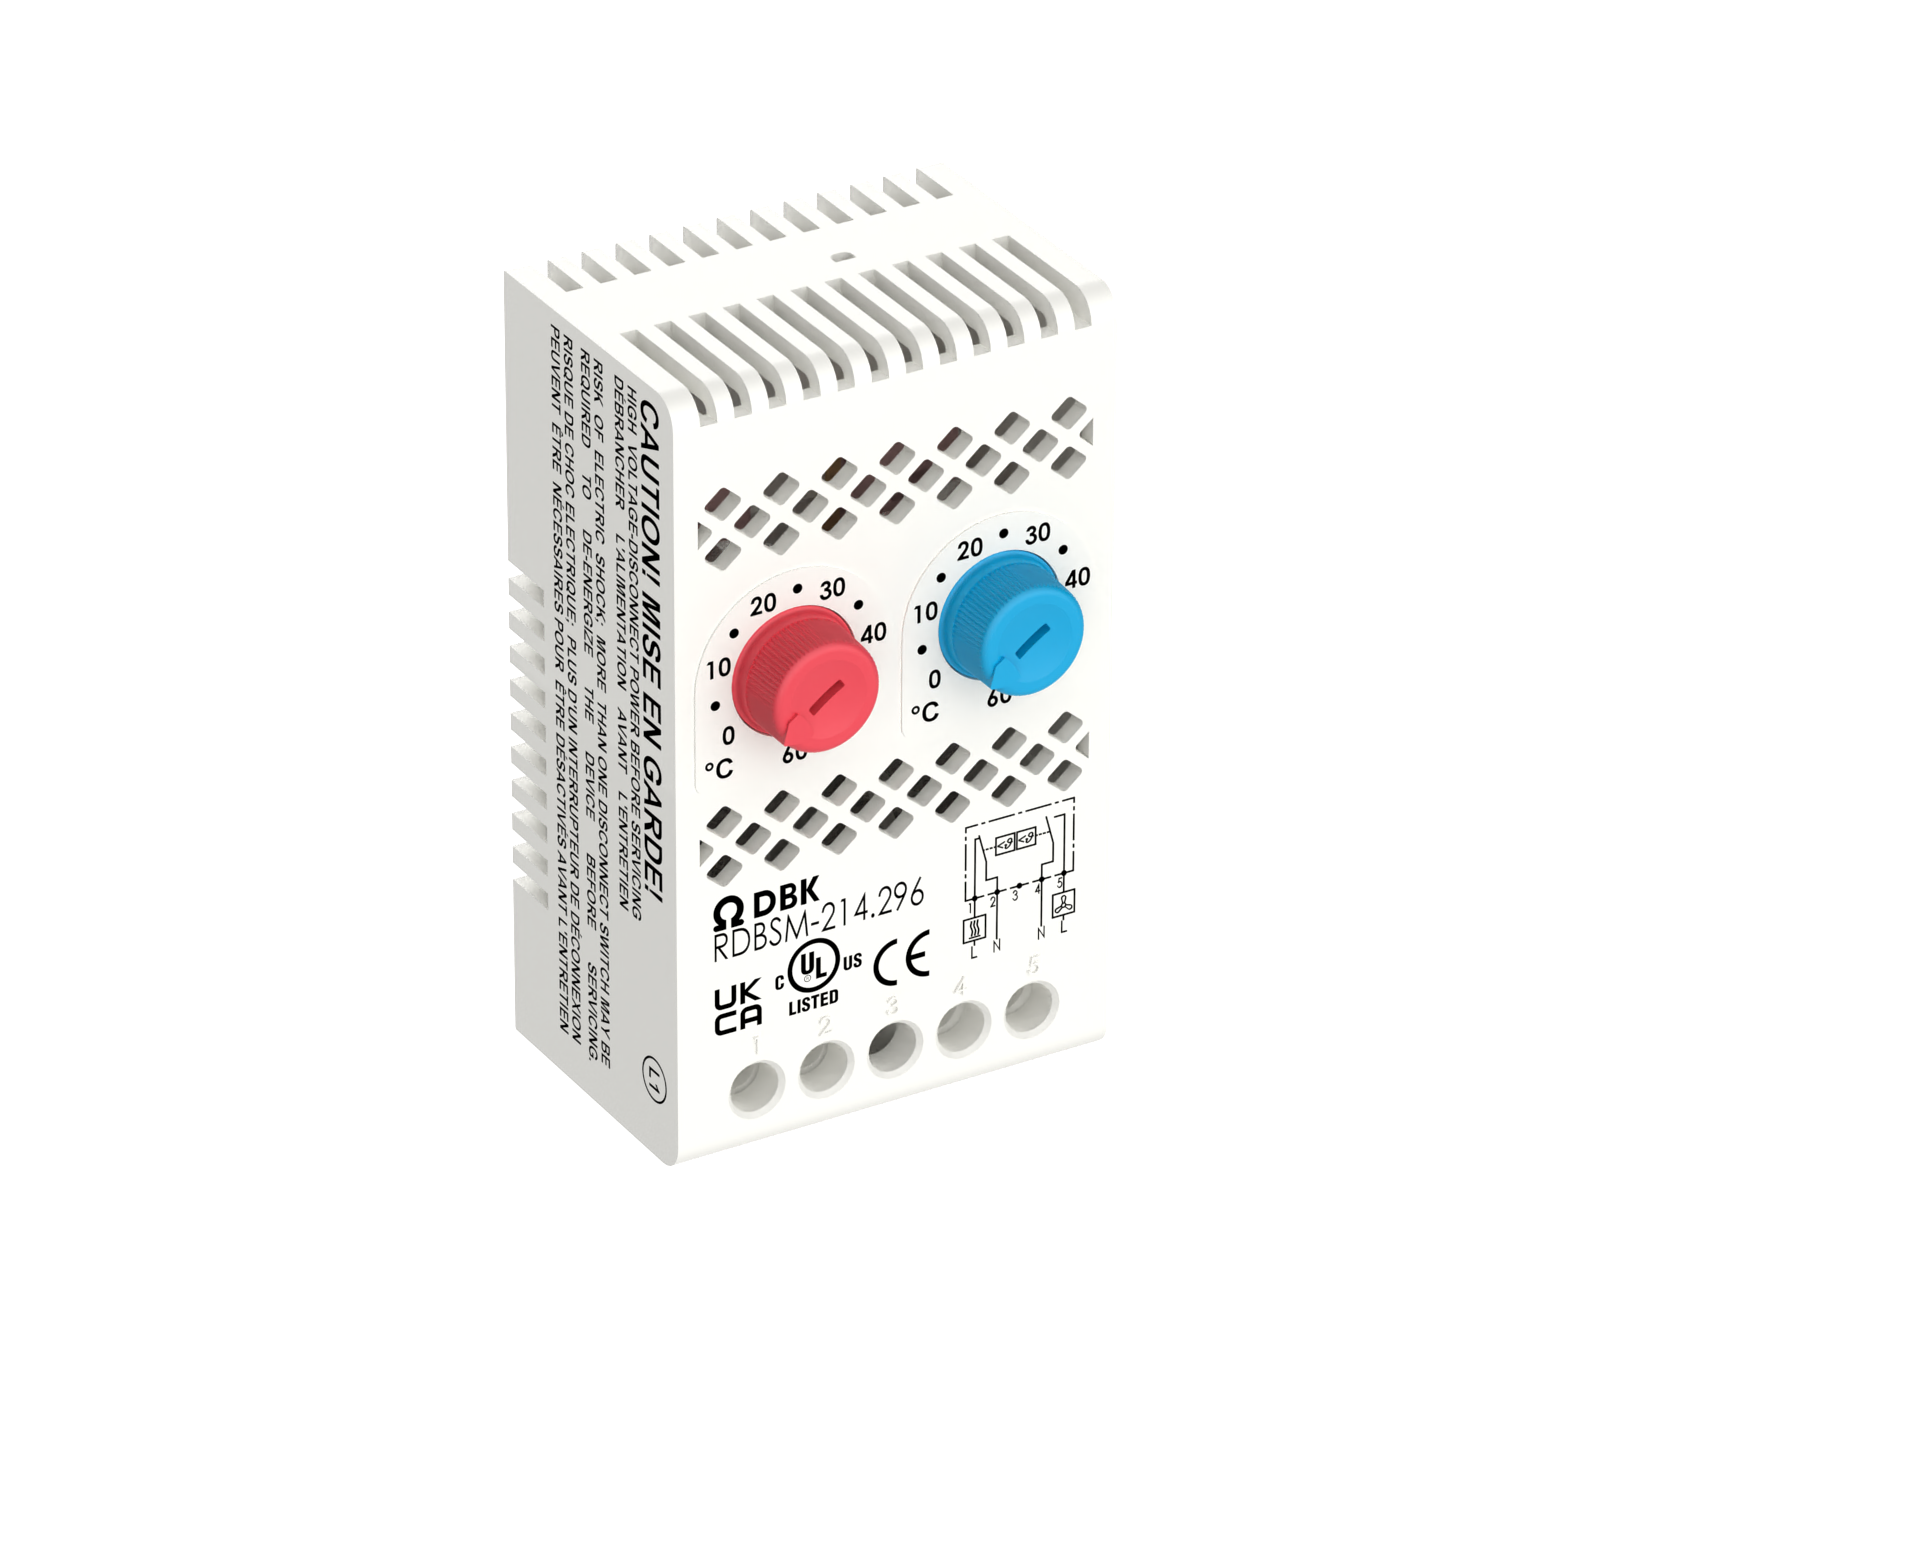 RDBSM Dual Bimetal Thermostat | RDBSM双金属双路温控器 | 迪比卡科技有限公司 DBK Technology